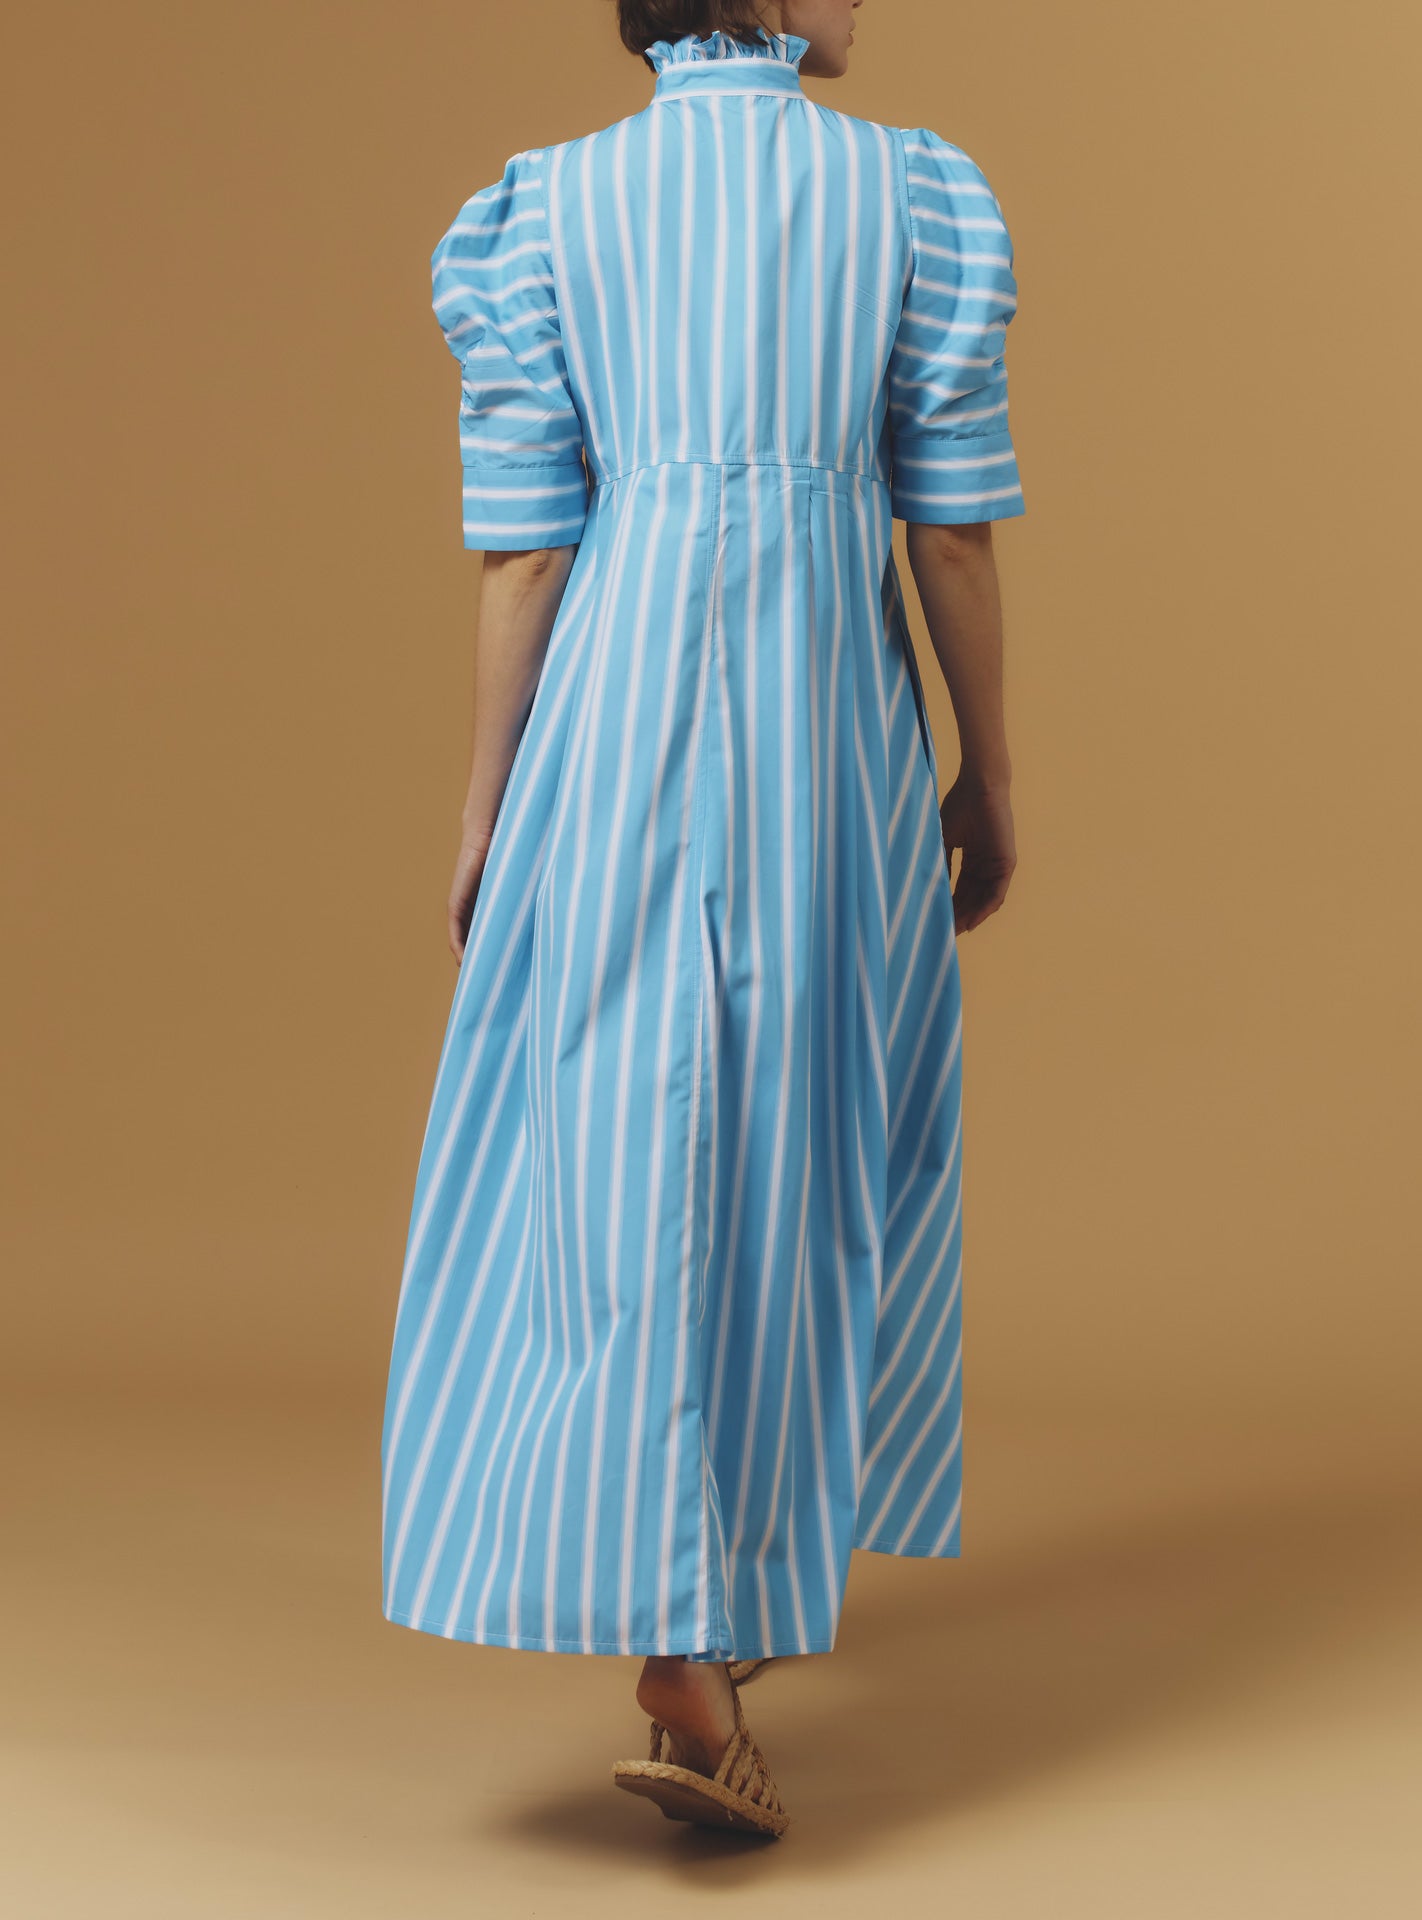 Back view of Venetia Azur Dress - Downing Poplin - Thierry Colson